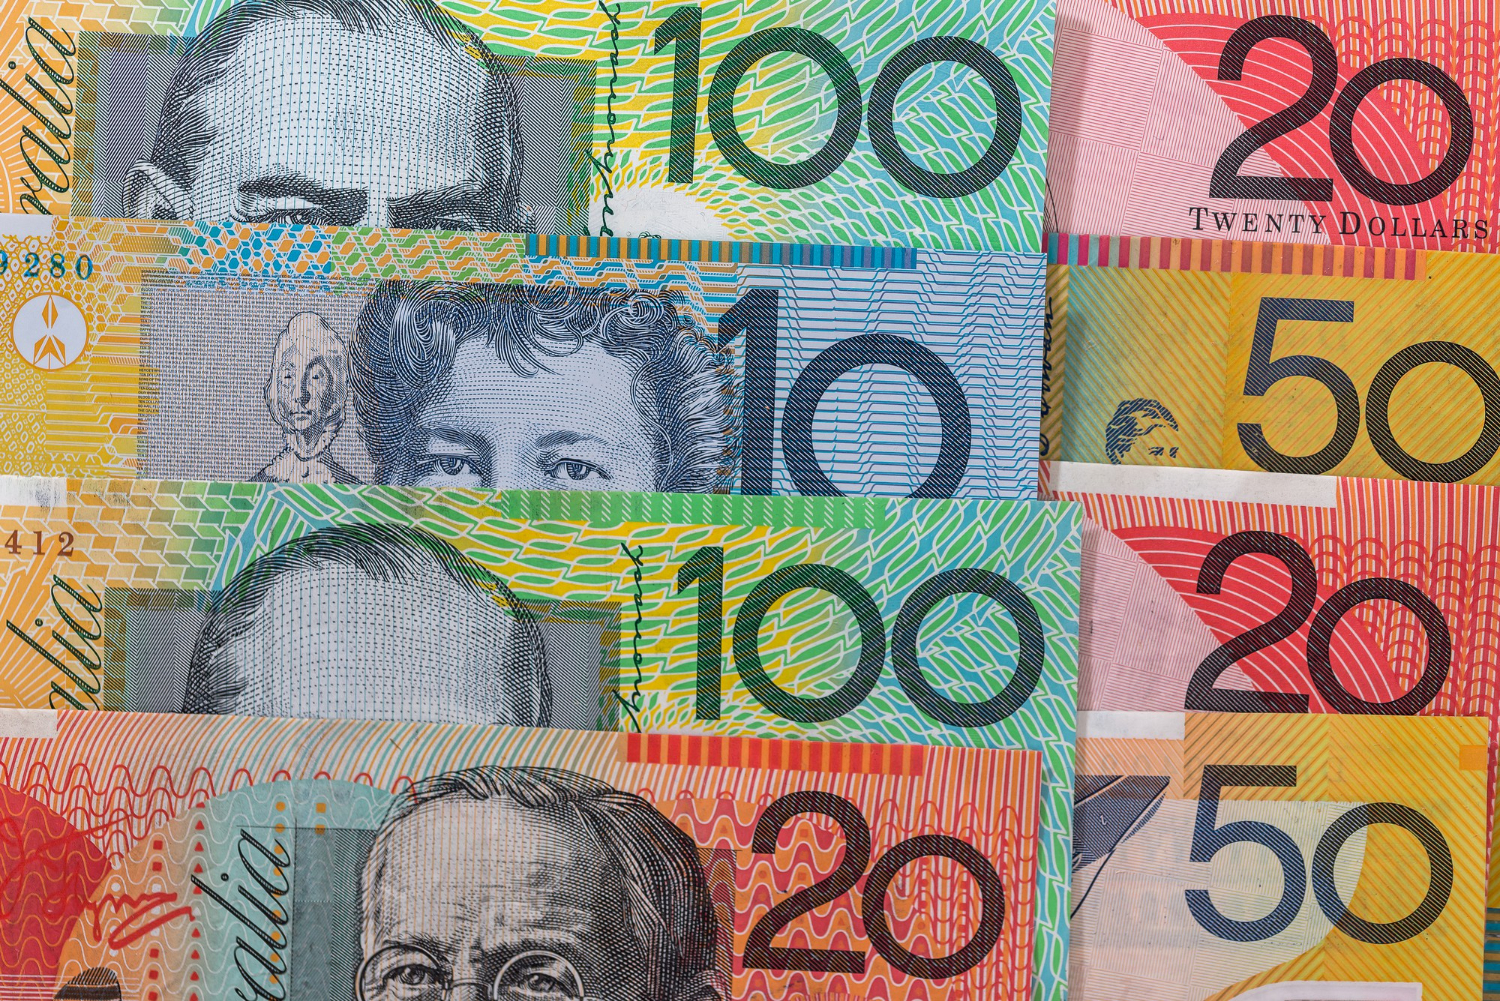 banknotes australian dollars rows